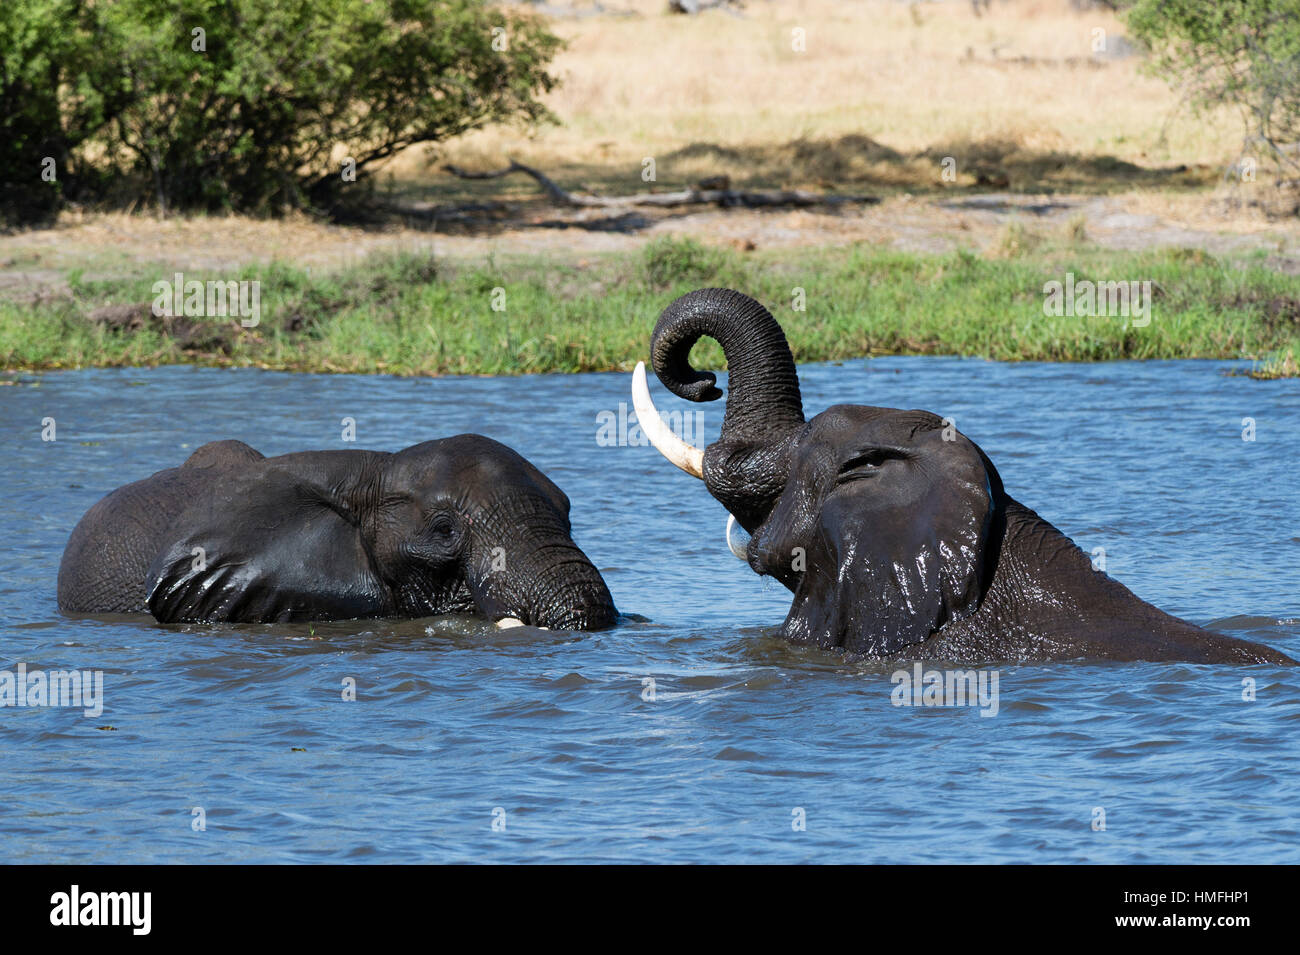 Two African elephants (Loxodonta africana) sparring in the River Khwai, Khwai Concession, Okavango Delta, Botswana Stock Photo